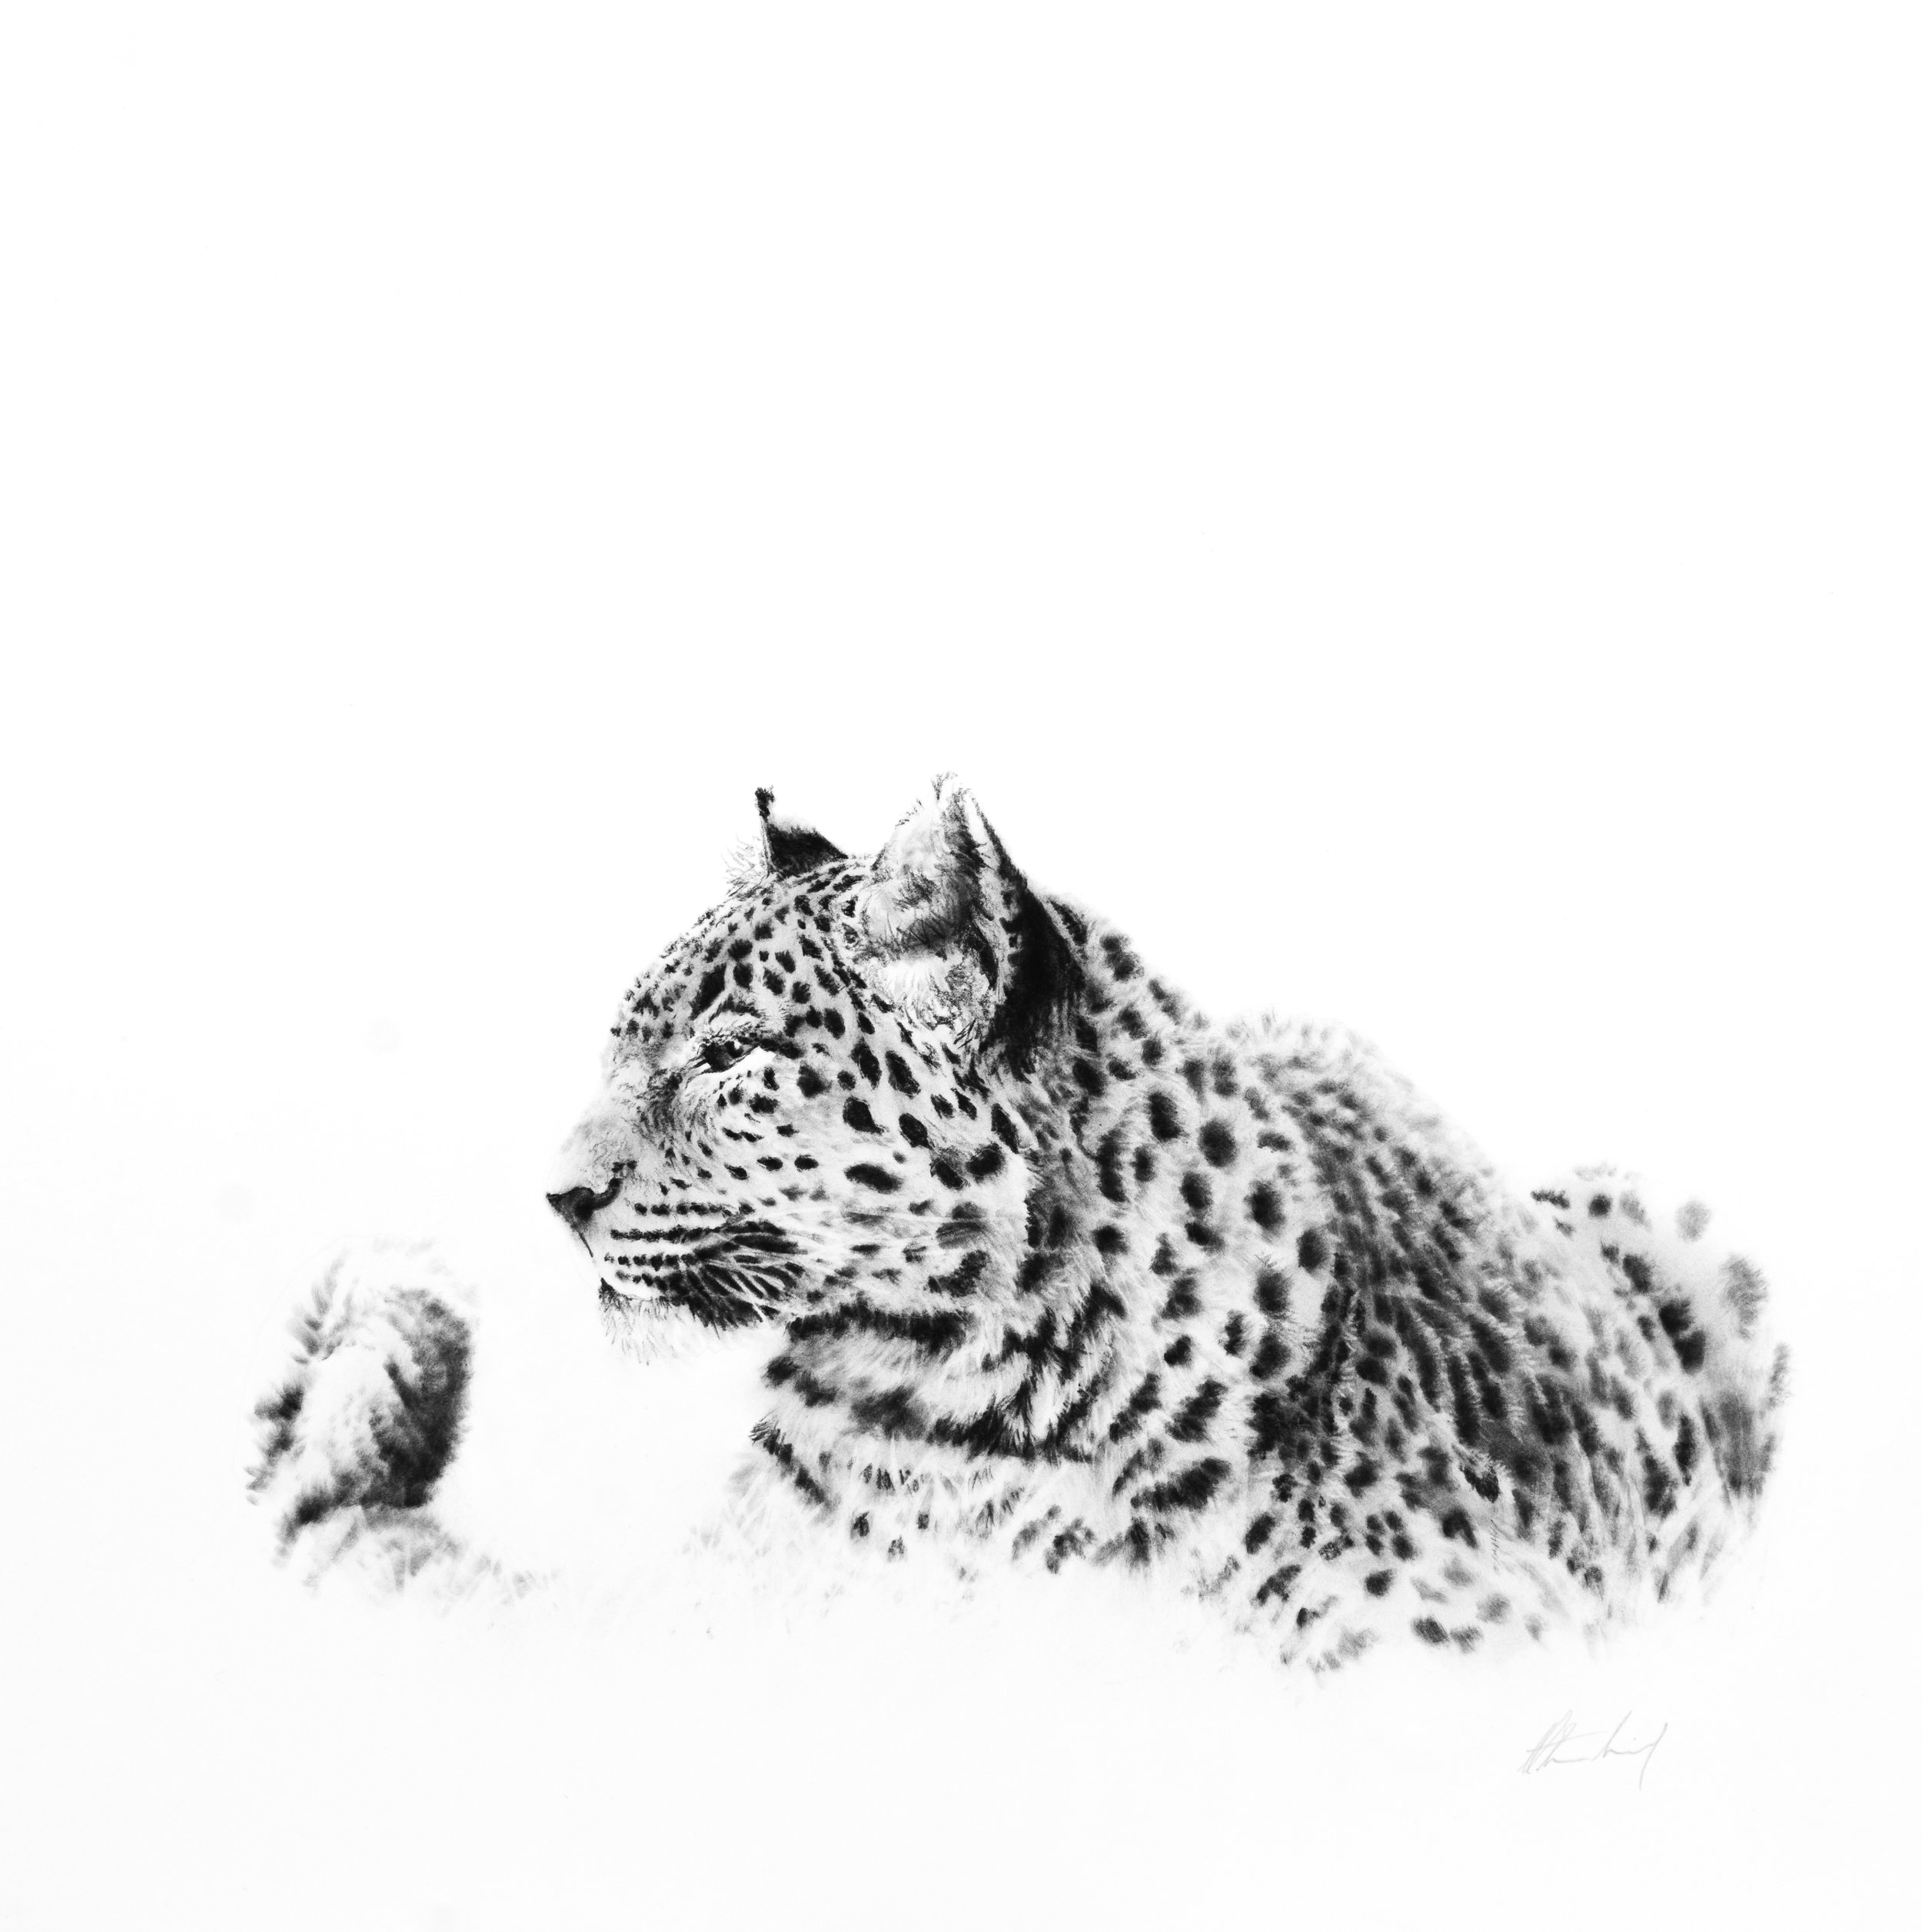 Amur leopard by Cole Stirling